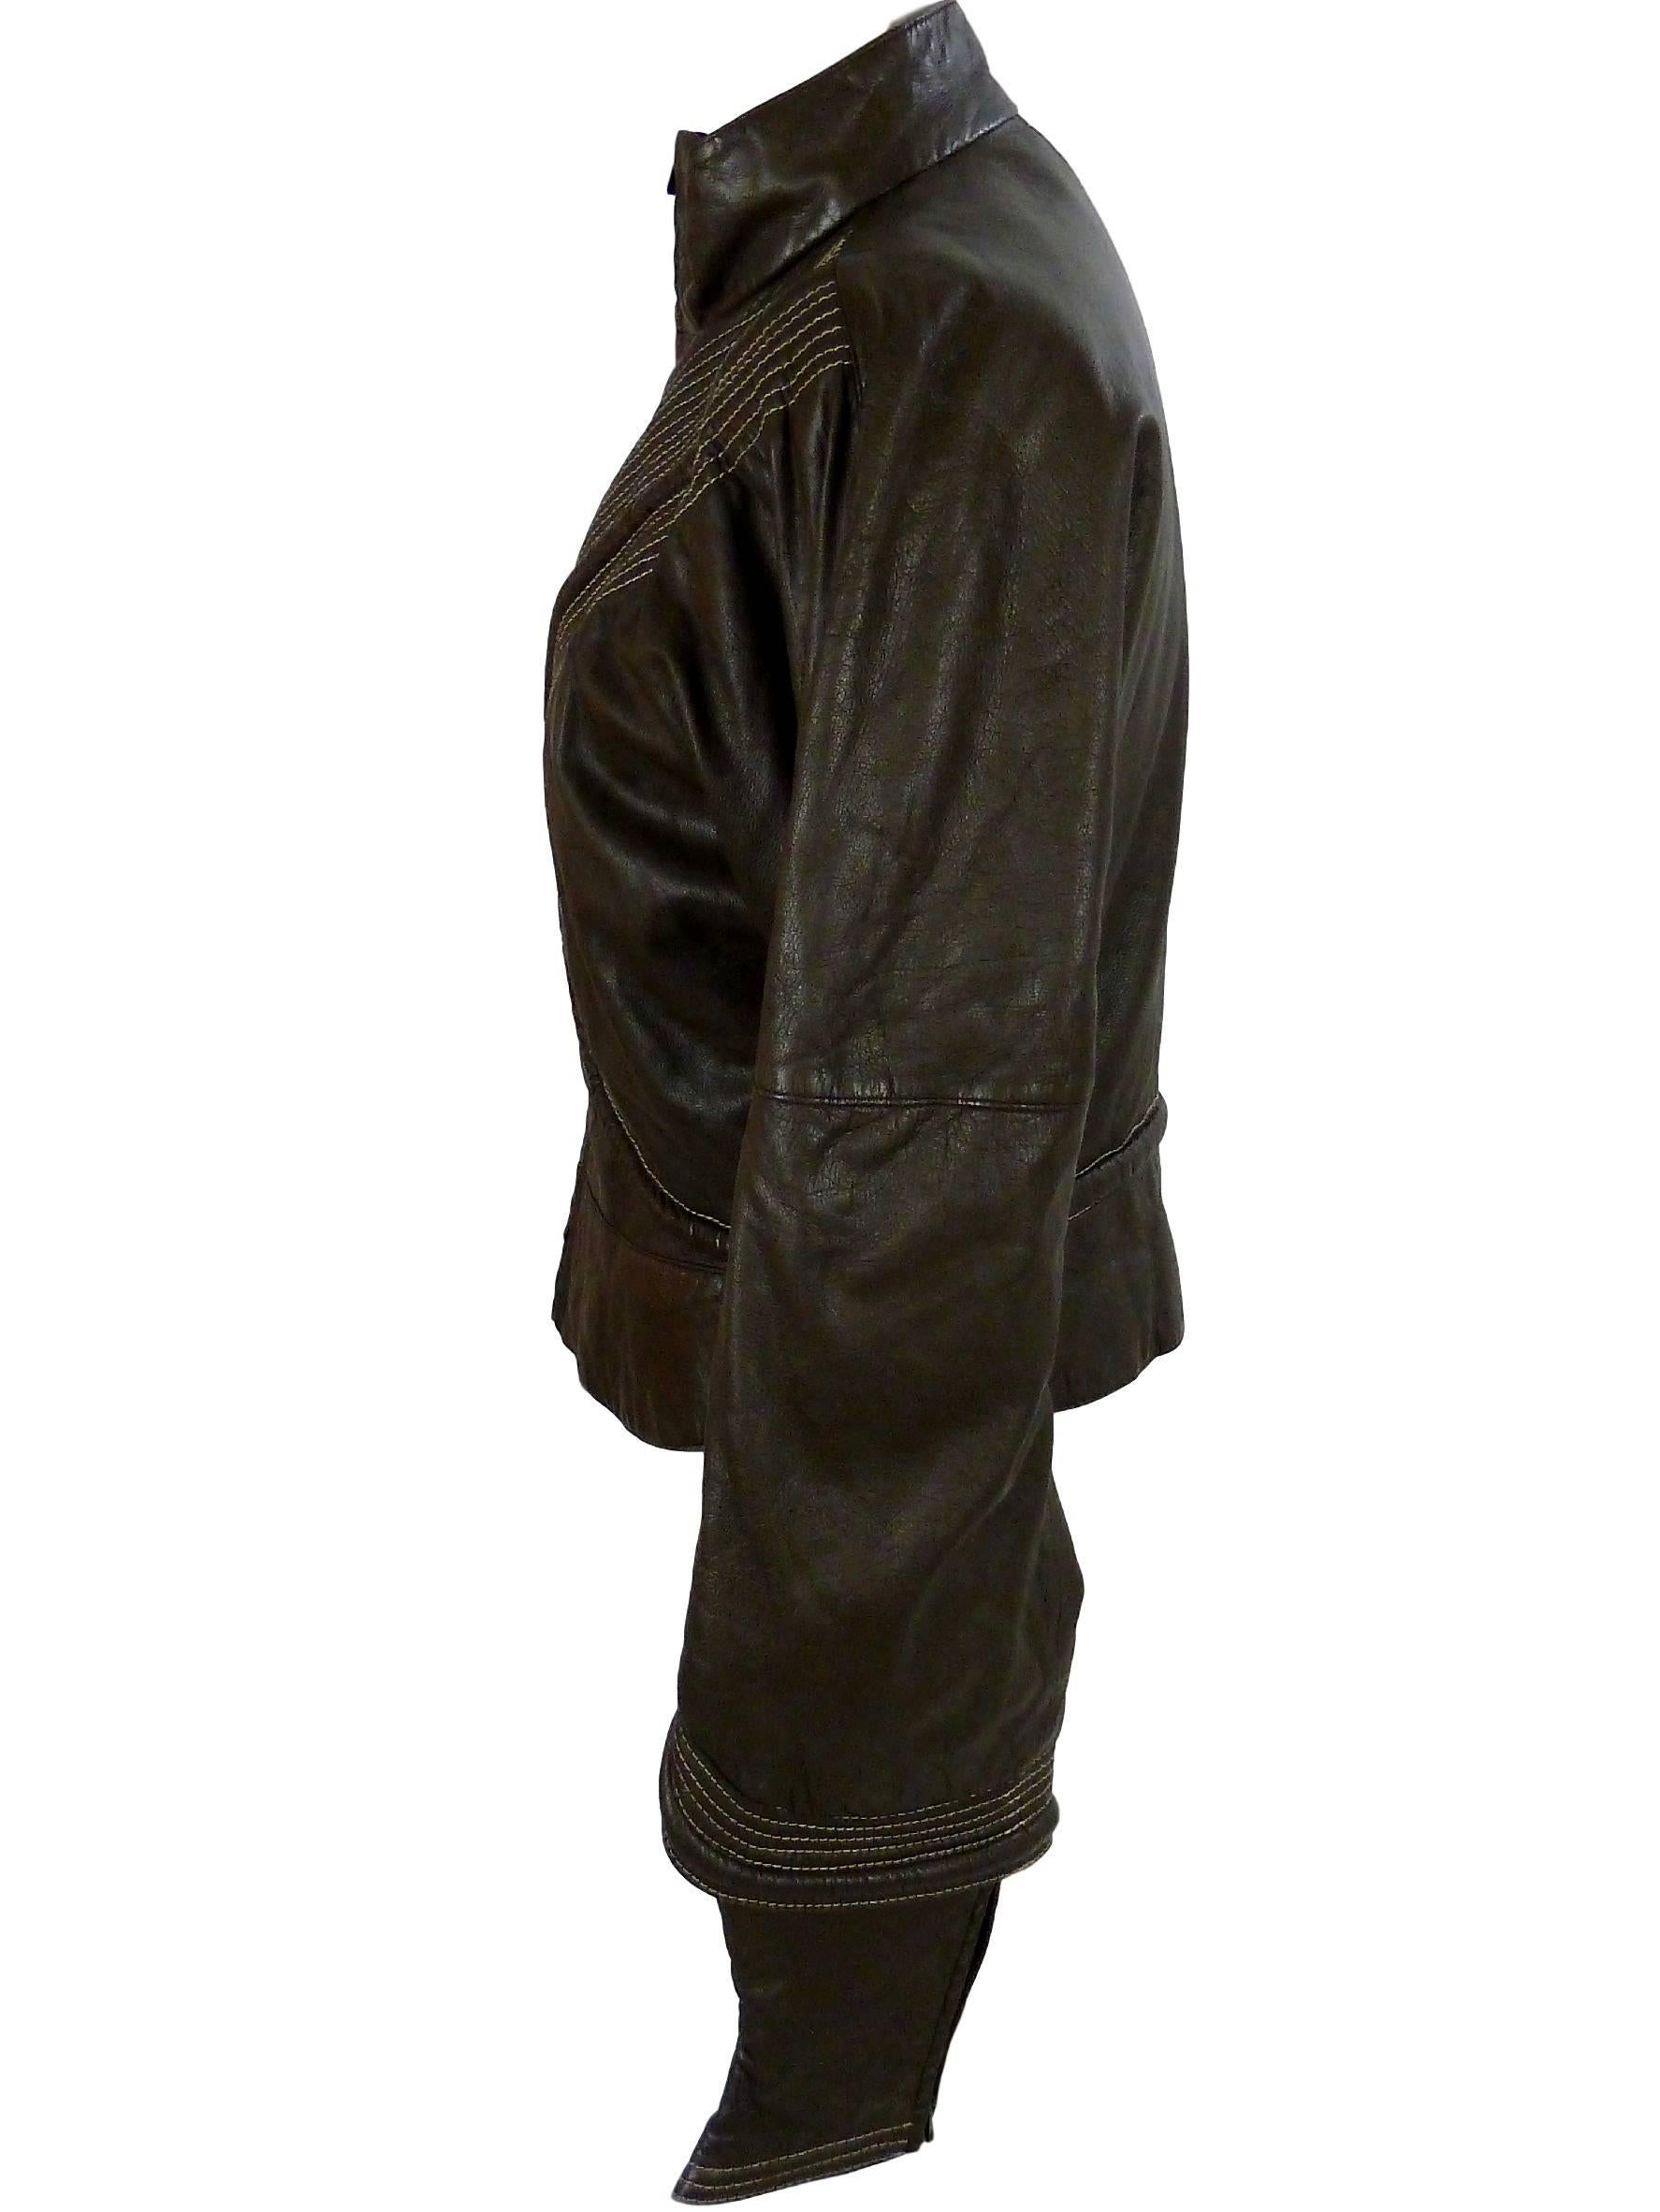 Black Gianfranco Ferrè vintage 1980s women's brown leather motorcycle jacket size 46 For Sale